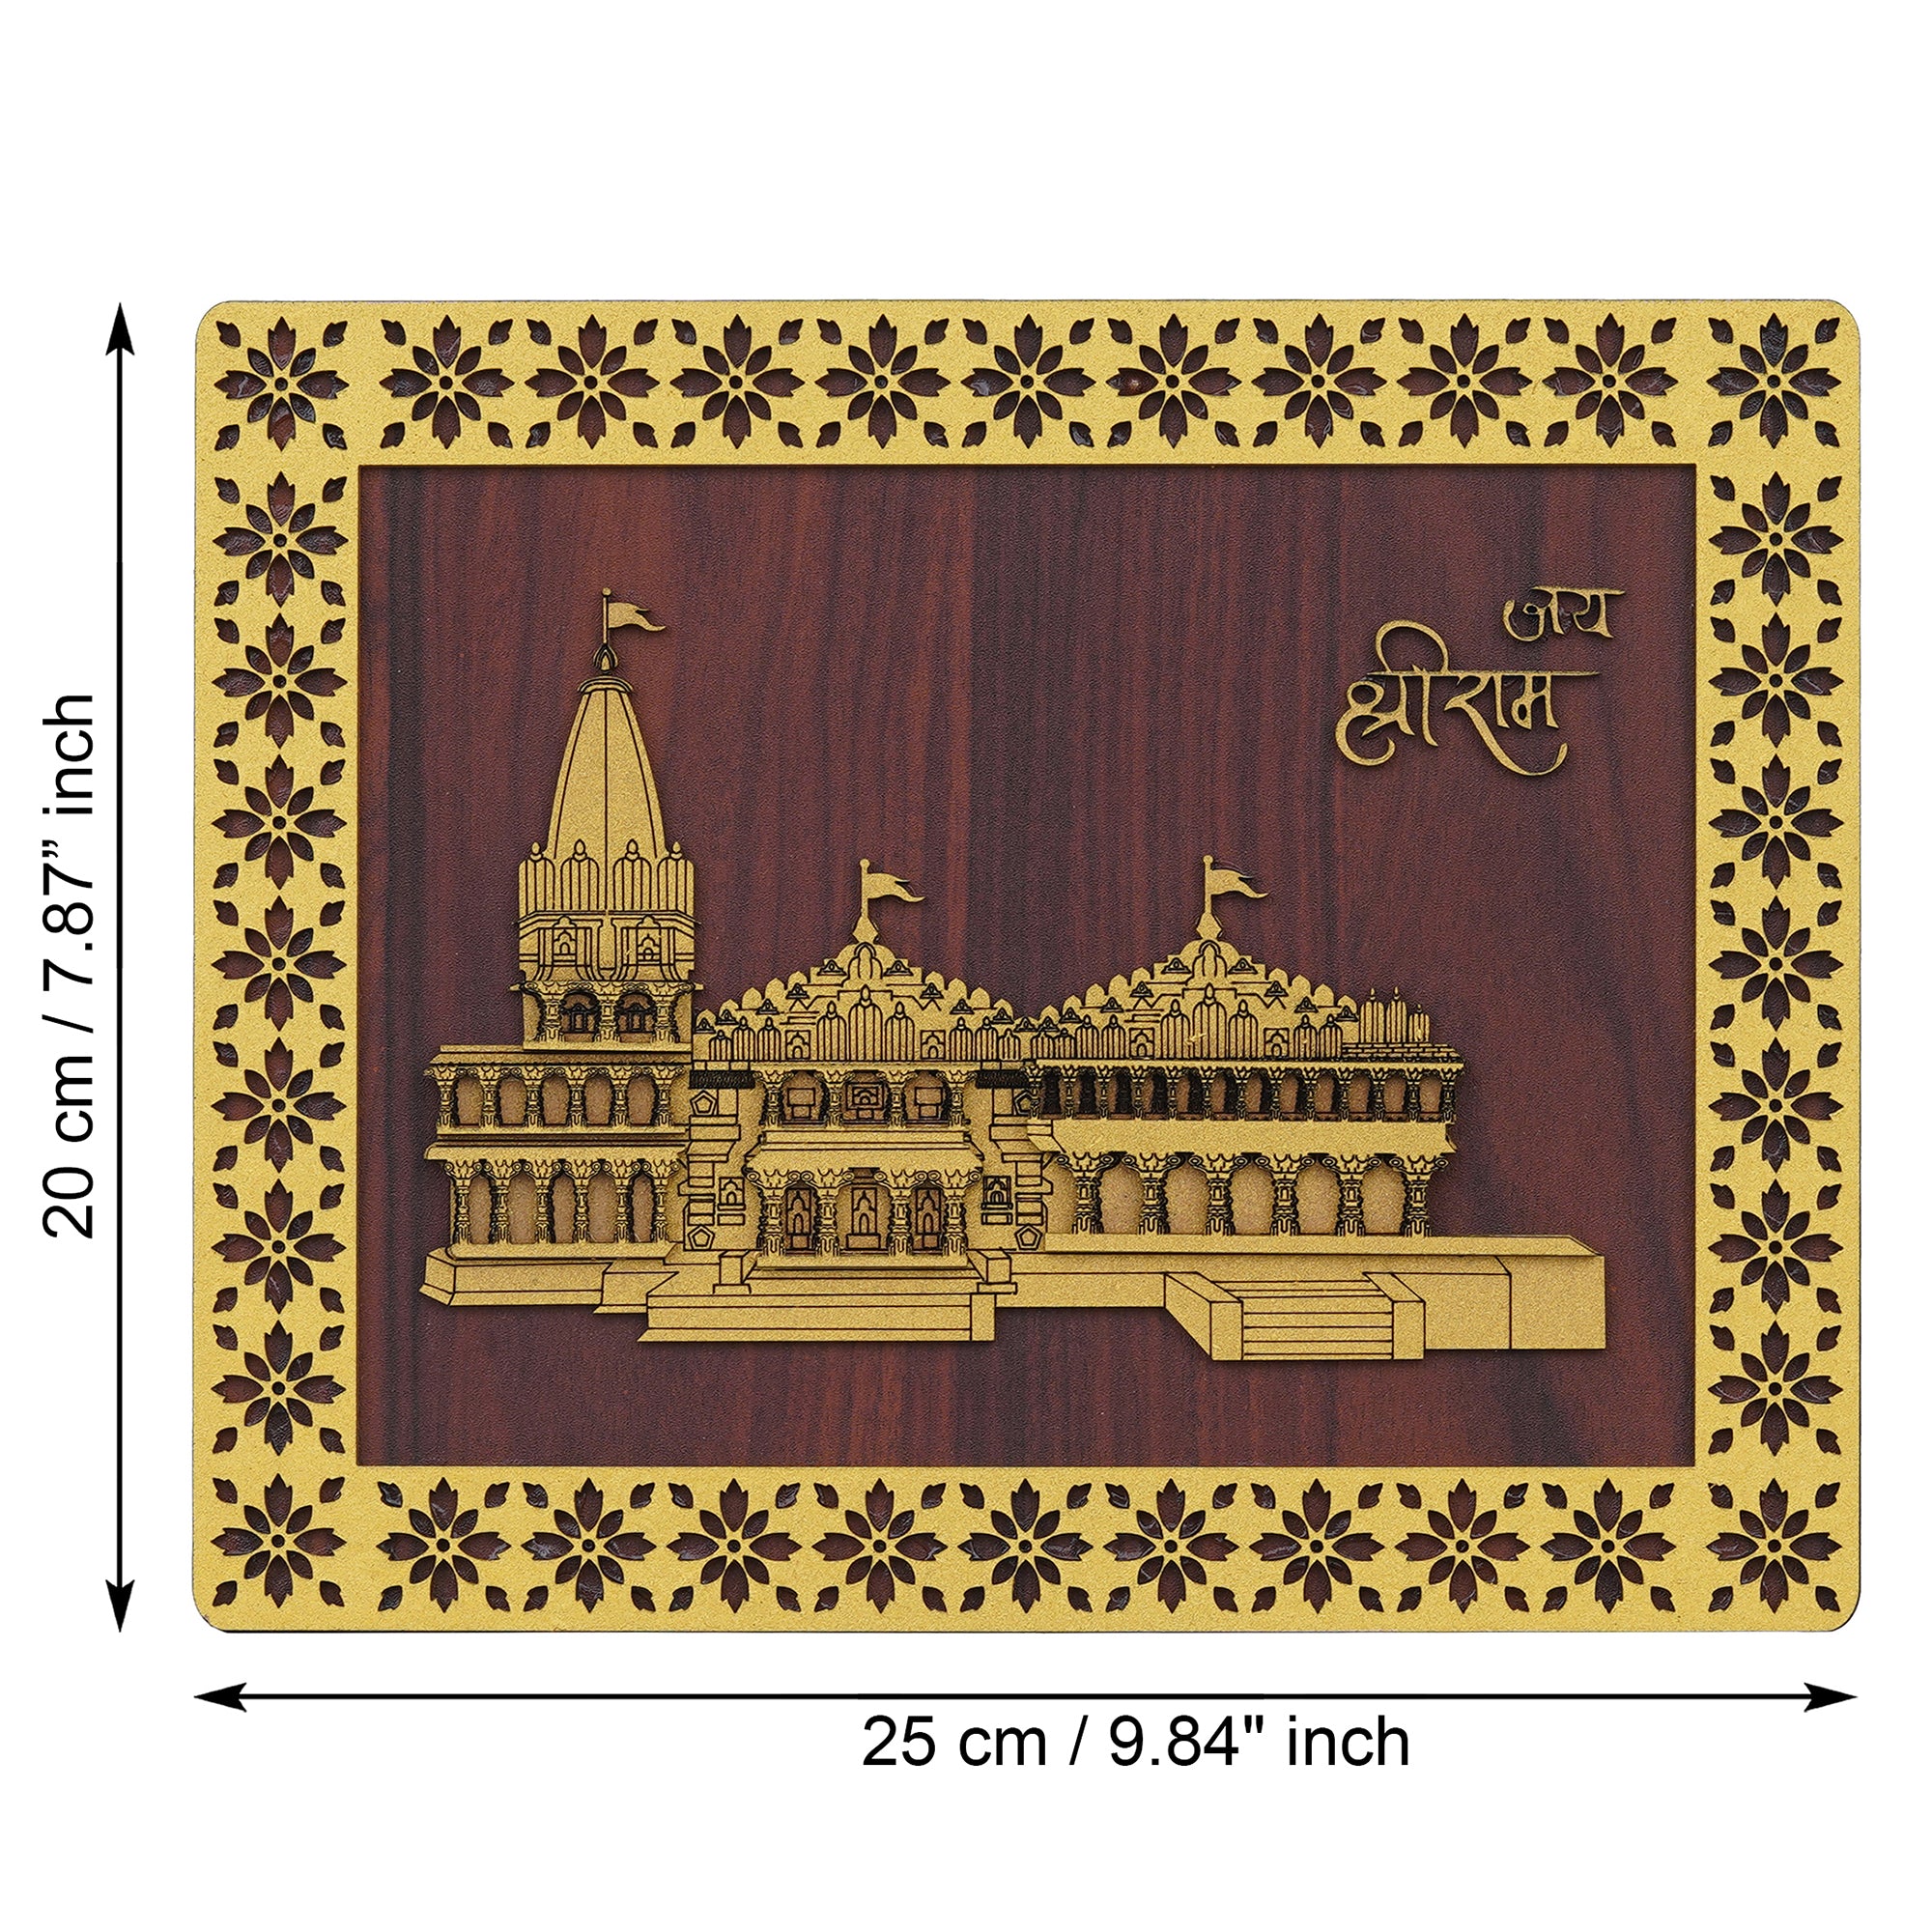 eCraftIndia Jai Shri Ram Mandir Ayodhya Decorative Wooden Frame - Religious Wall Hanging Showpiece for Home Decor, and Spiritual Gifting (Gold, Brown) 3